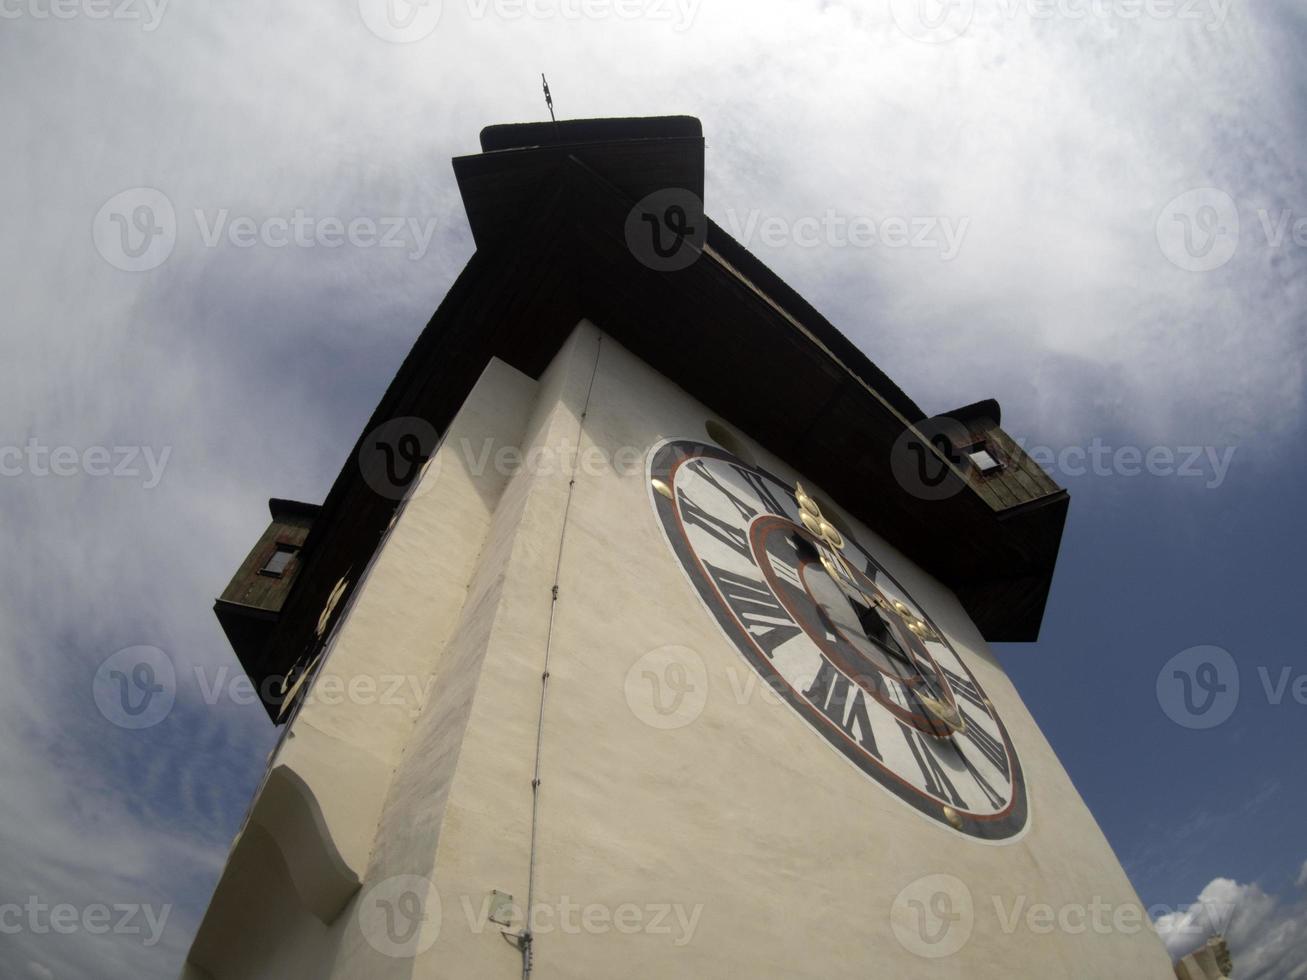 Graz Austria historical clock tower photo